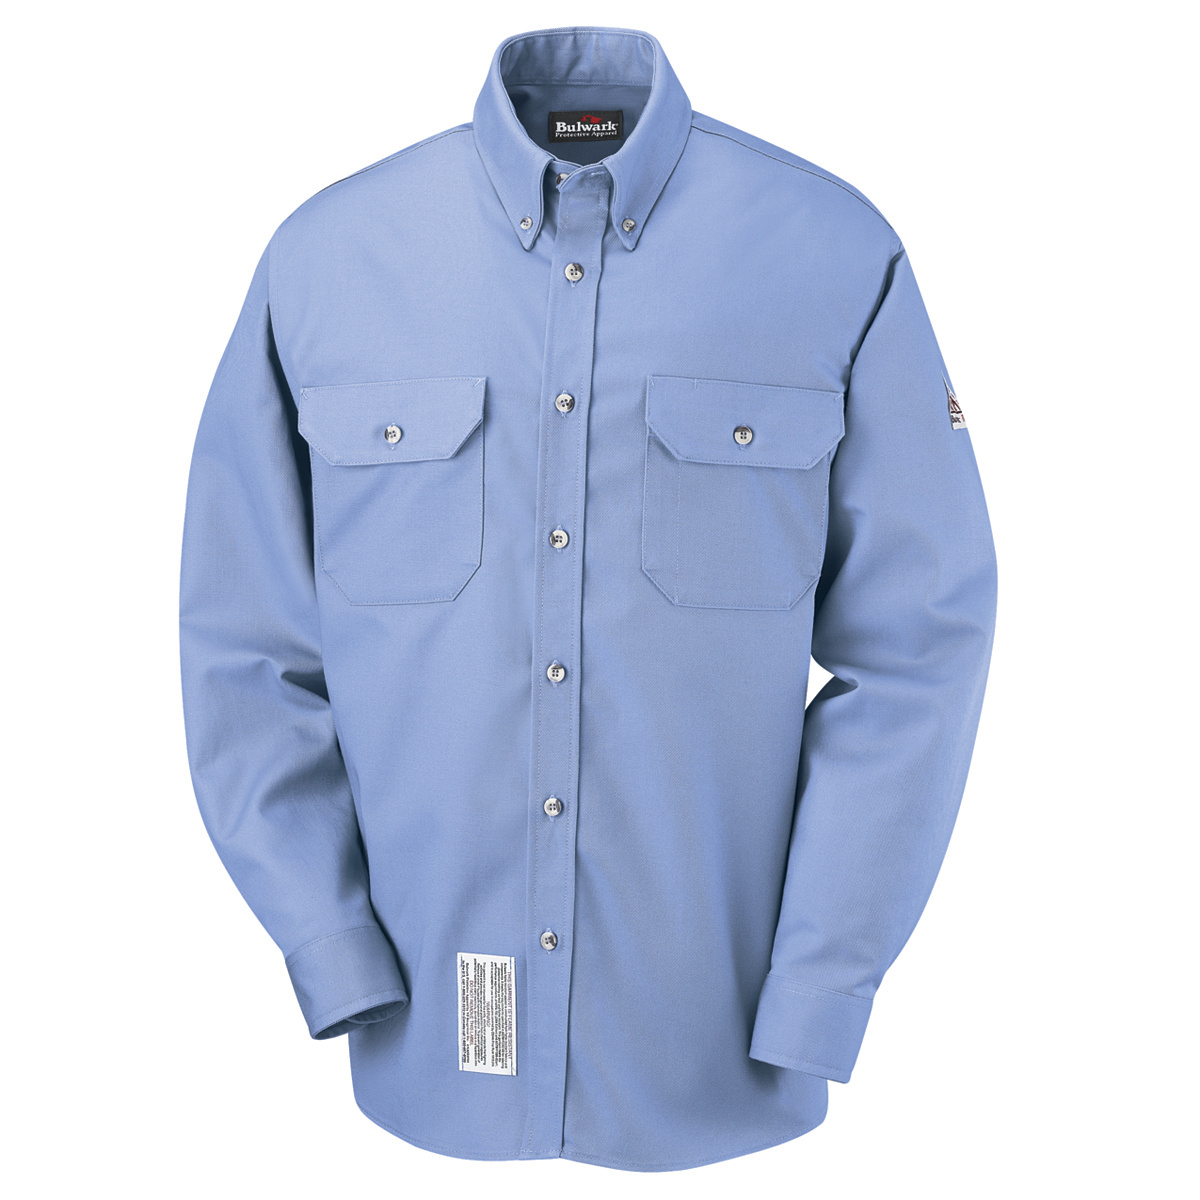 Bulwark® Medium Tall Light Blue Westex Ultrasoft®/Cotton/Nylon Flame Resistant Dress Shirt With Button Front Closure